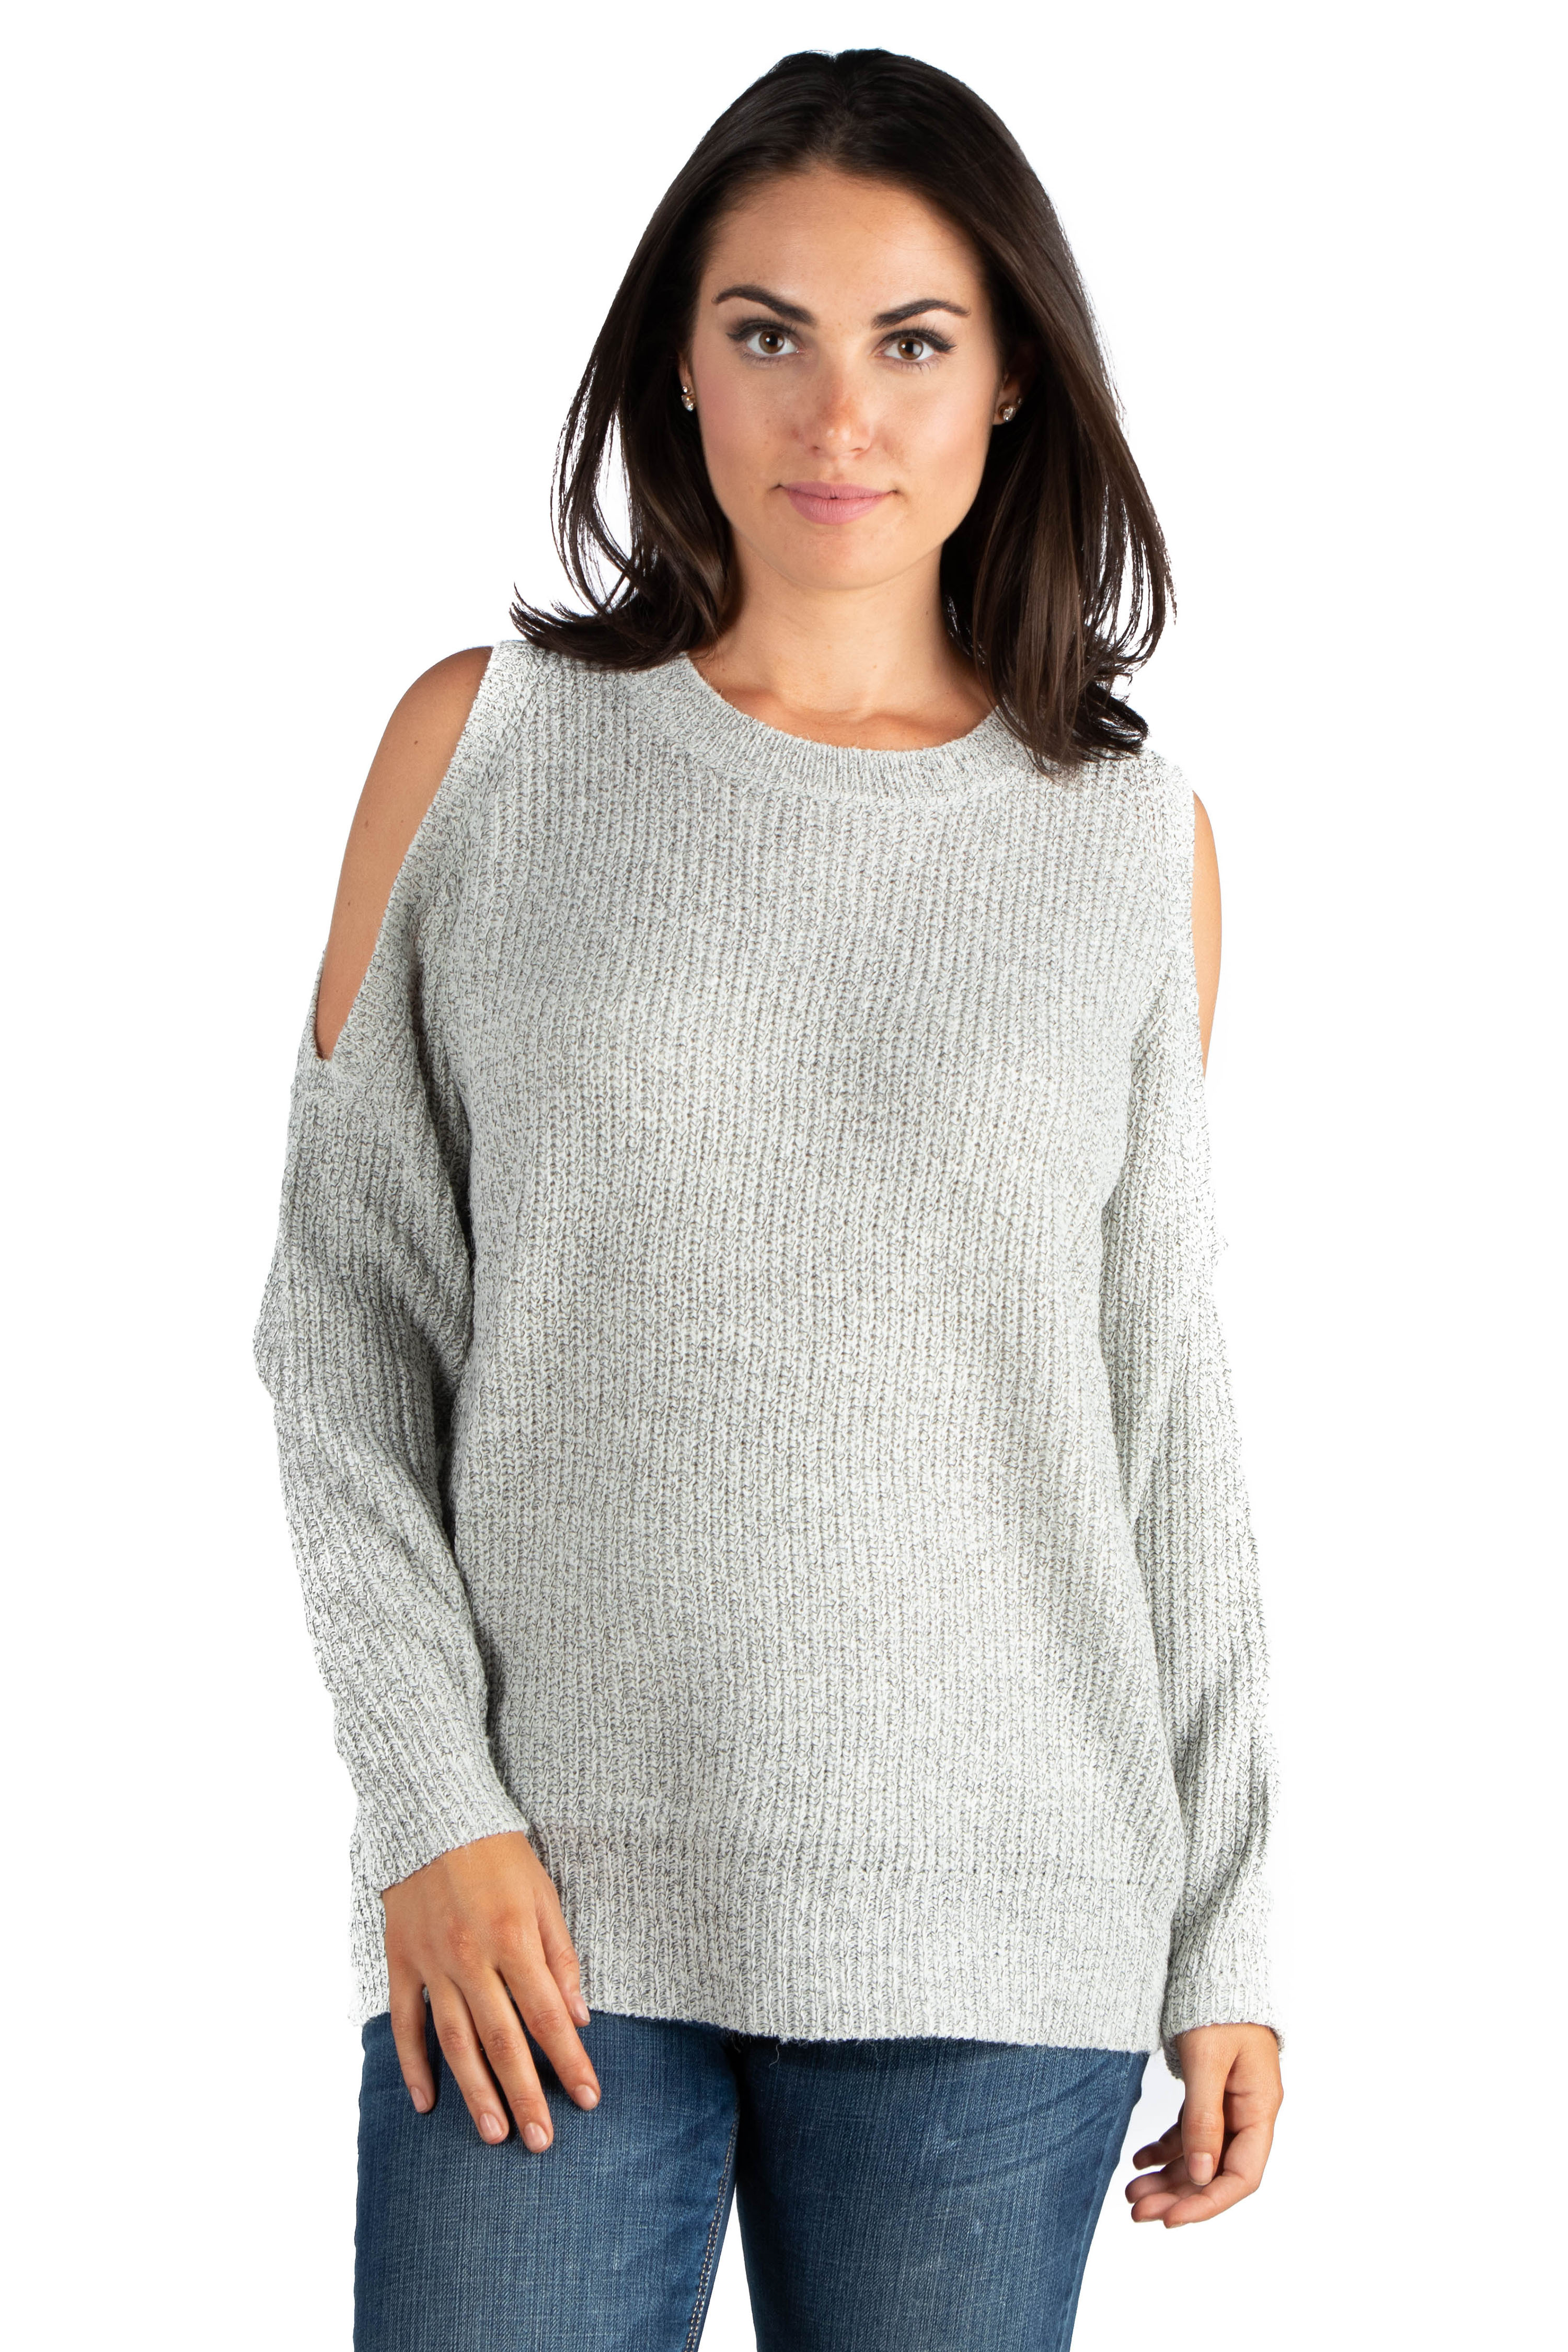 Women's Long Sleeve Cold Shoulder Sweater Top - Walmart.com